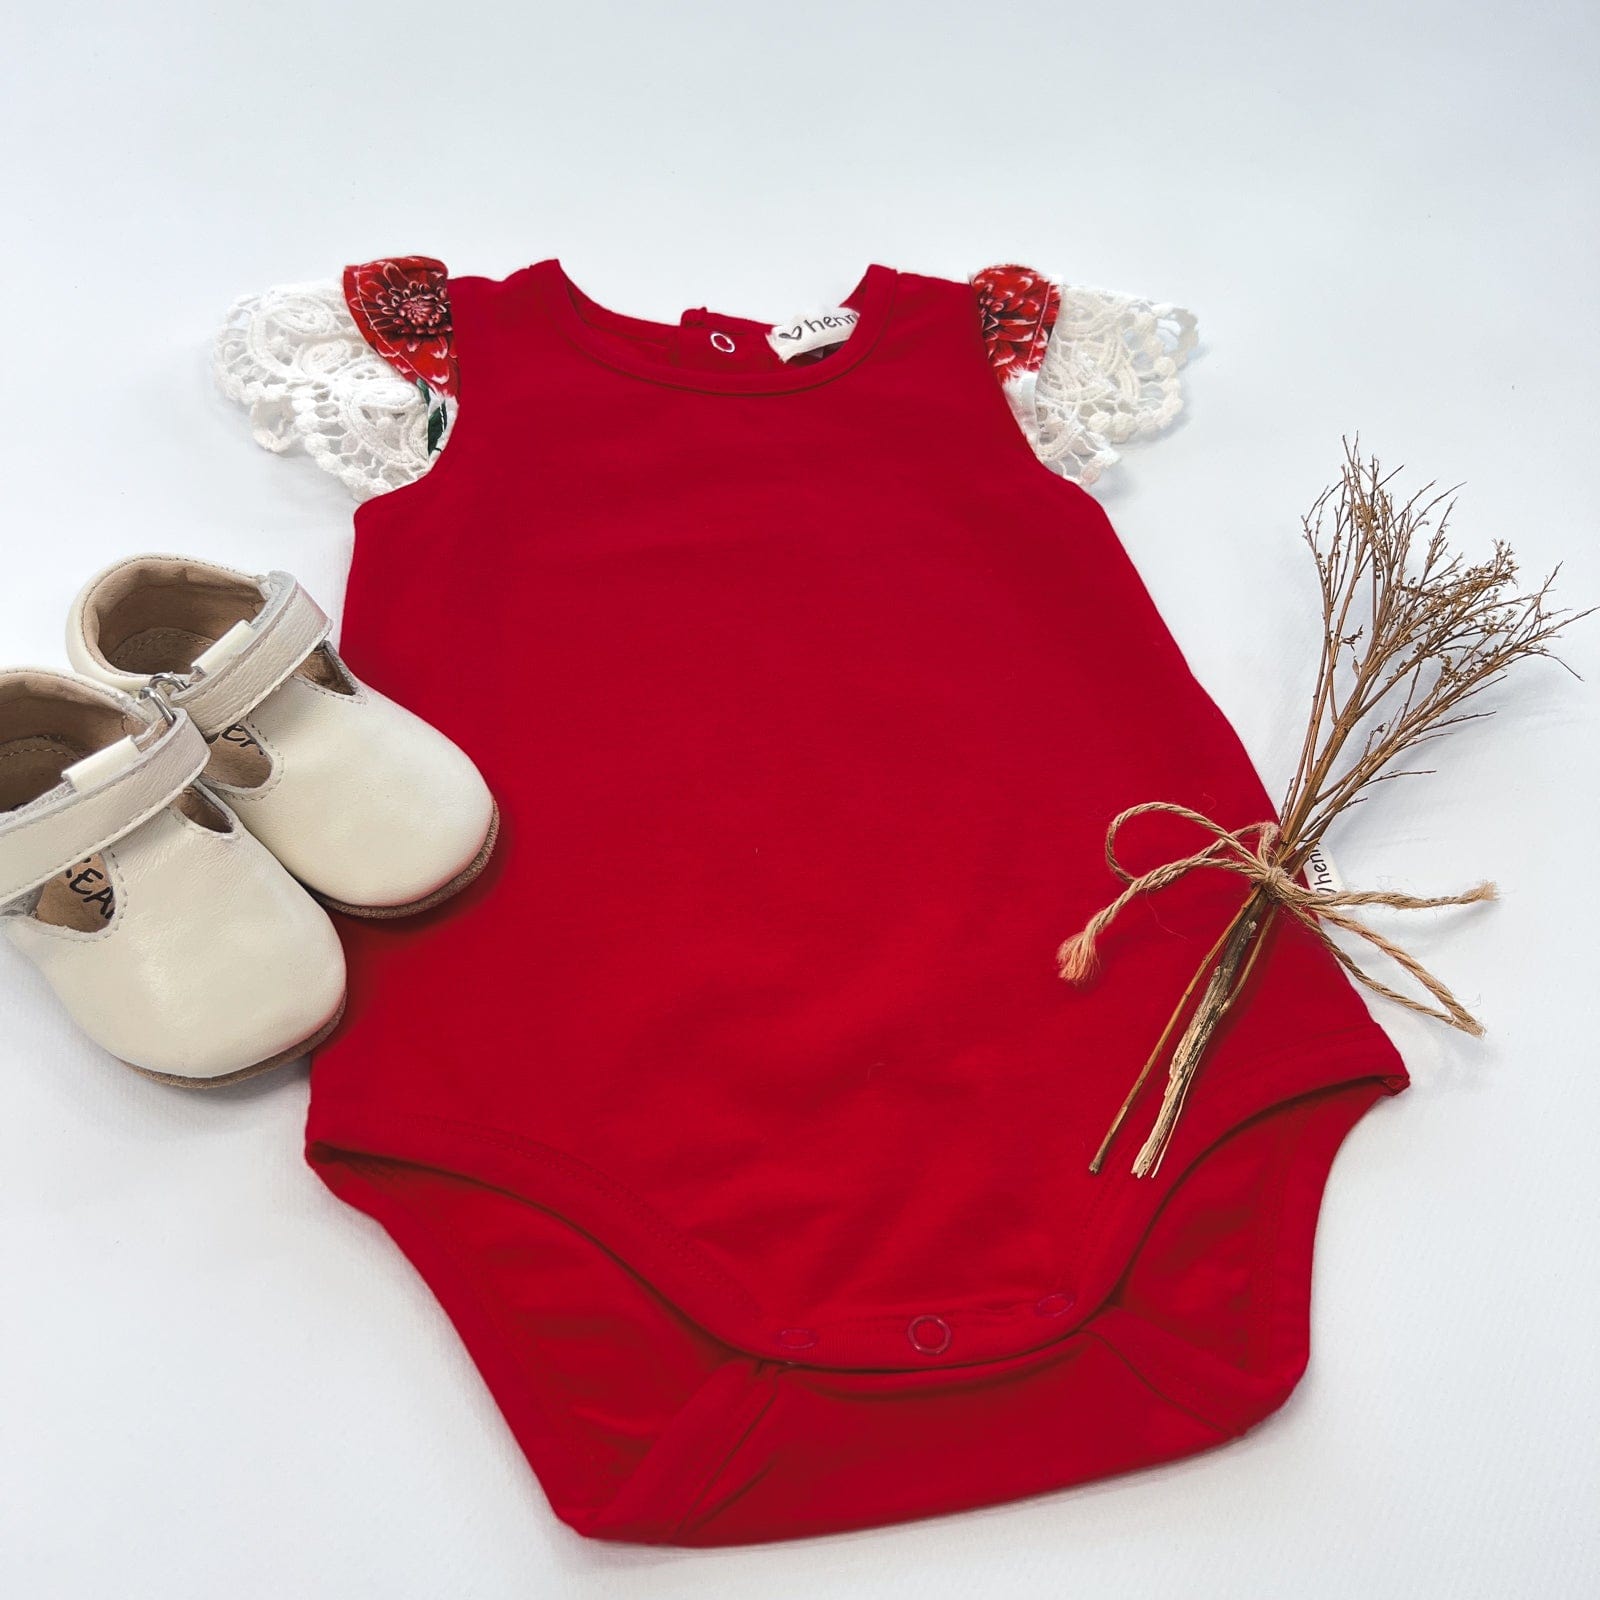 Love Henry Knit Onesie Baby Girls Knit Romper - Red